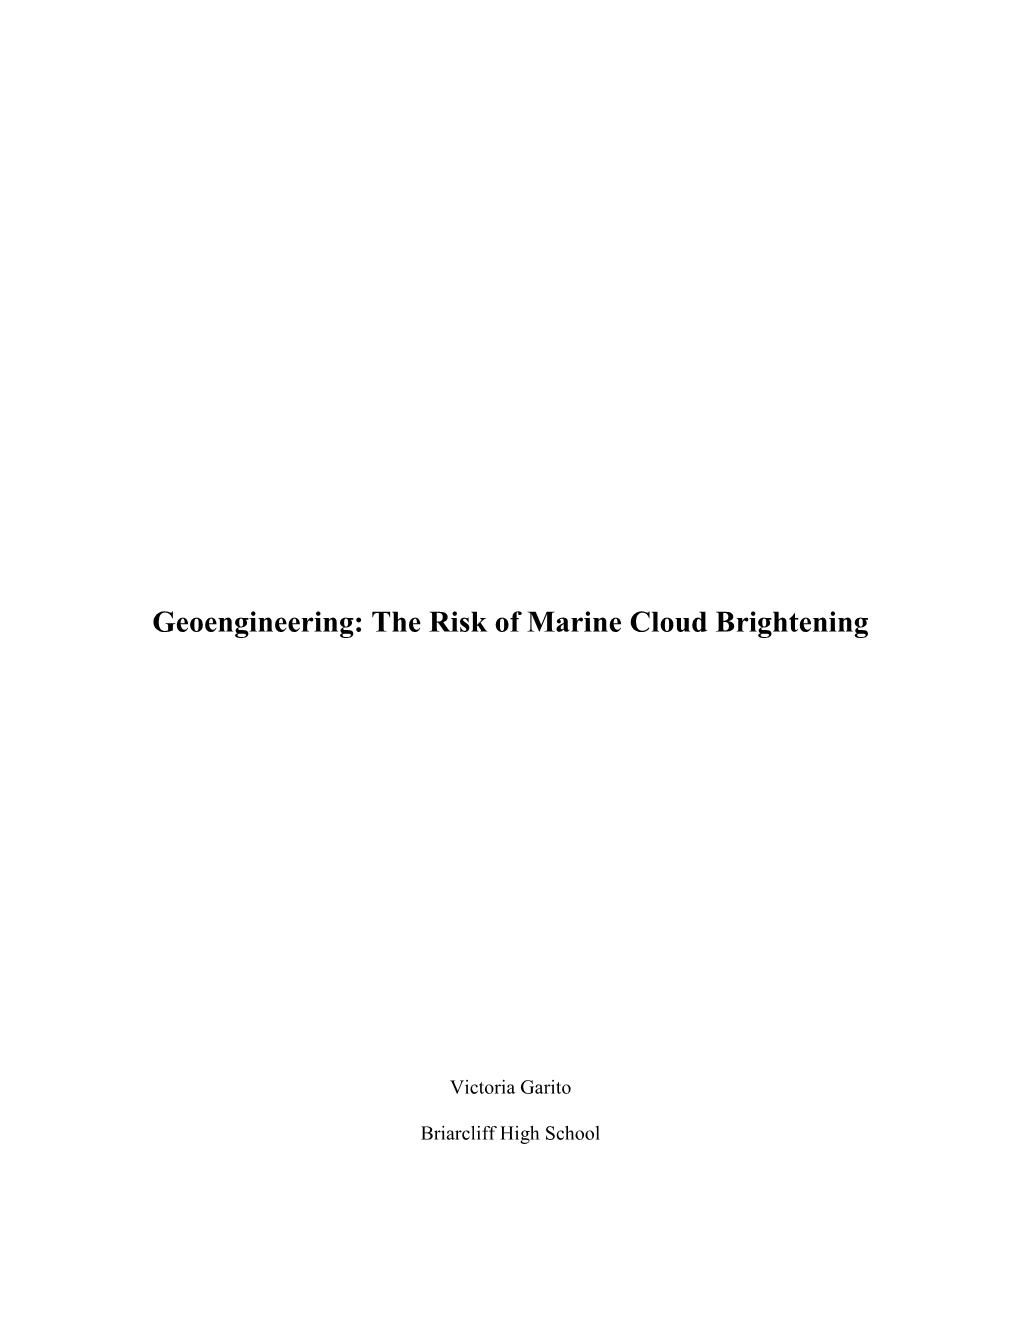 Geoengineering: the Risk of Marine Cloud Brightening